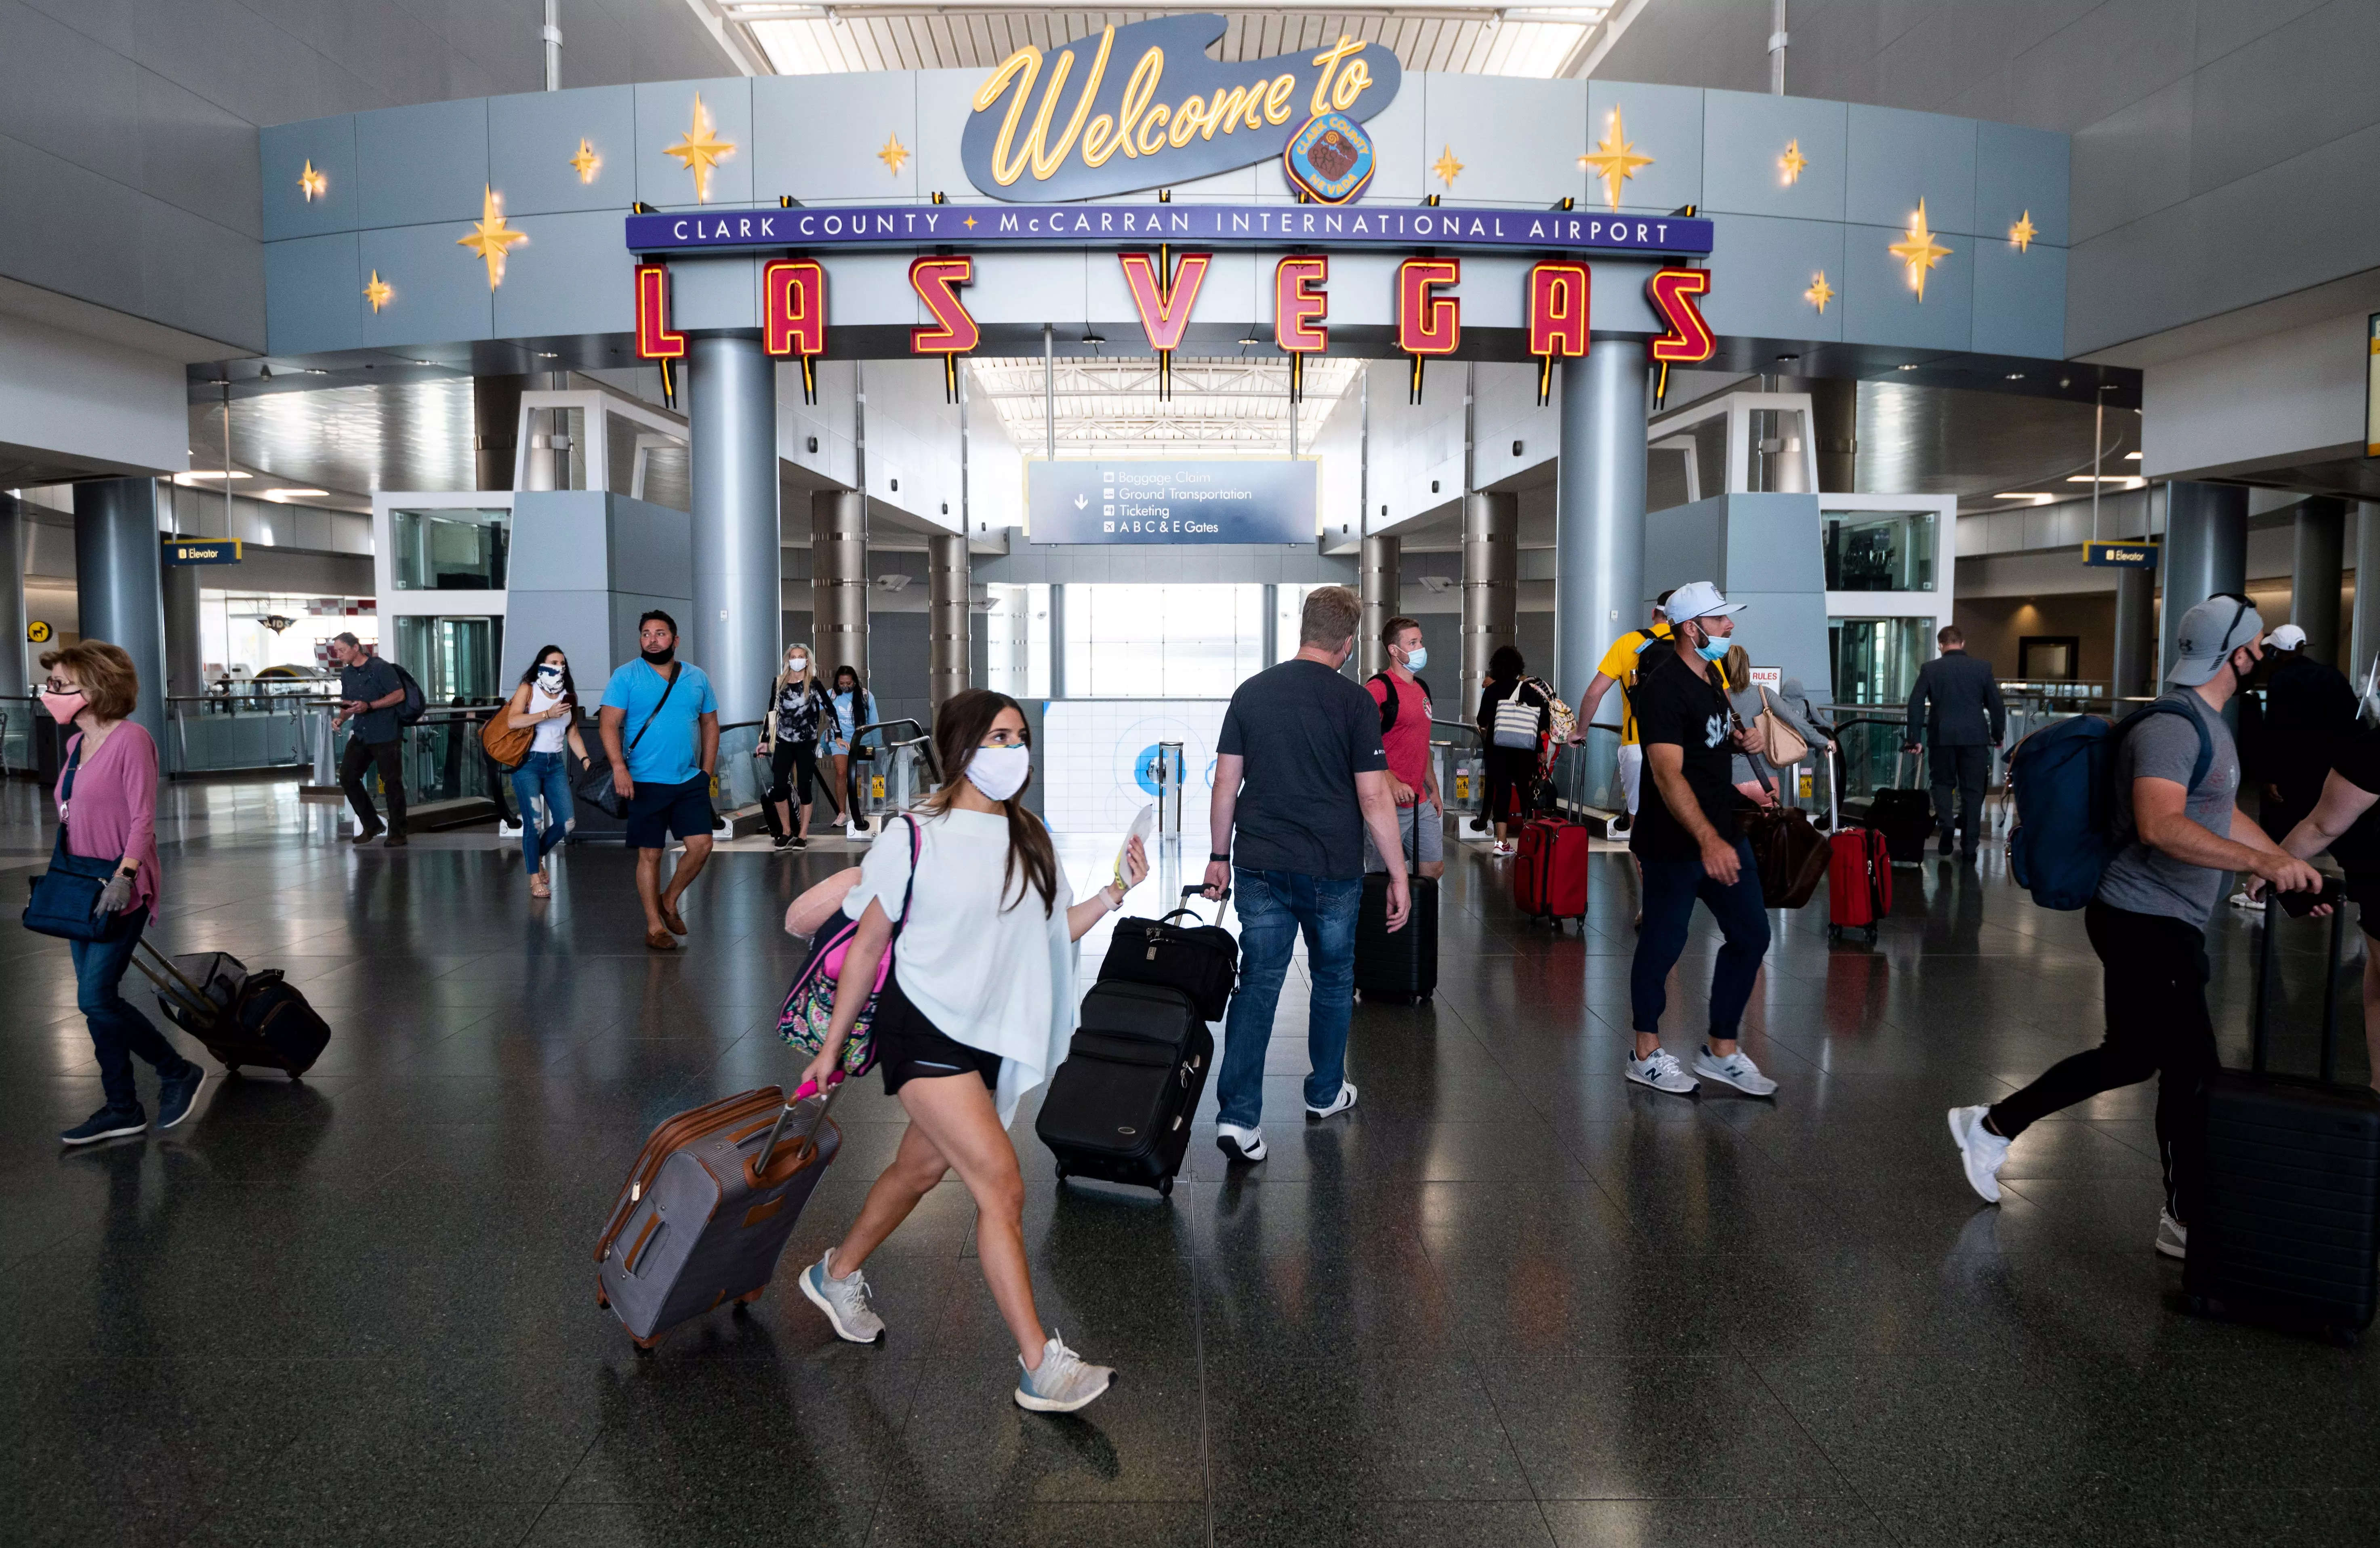 Passengers ran through security without being screened at Las Vegas